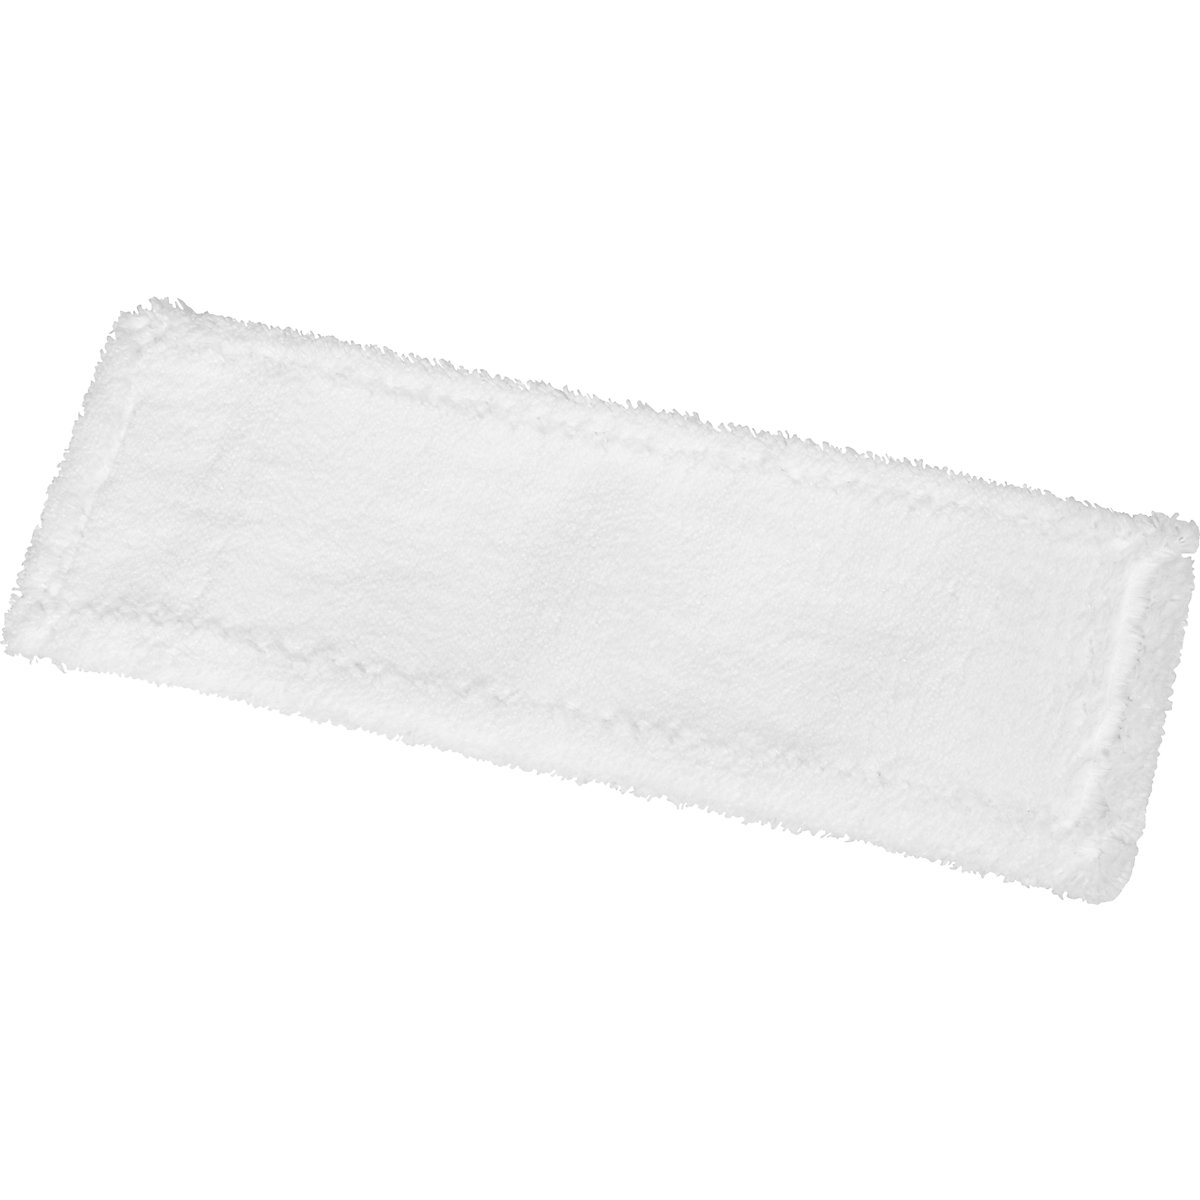 Prevleka za pomivanje/mop SPRINT PROGRESSIVE – Vermop, širina 400 mm, bele barve, iz mikrovlaken, od 10 kosov